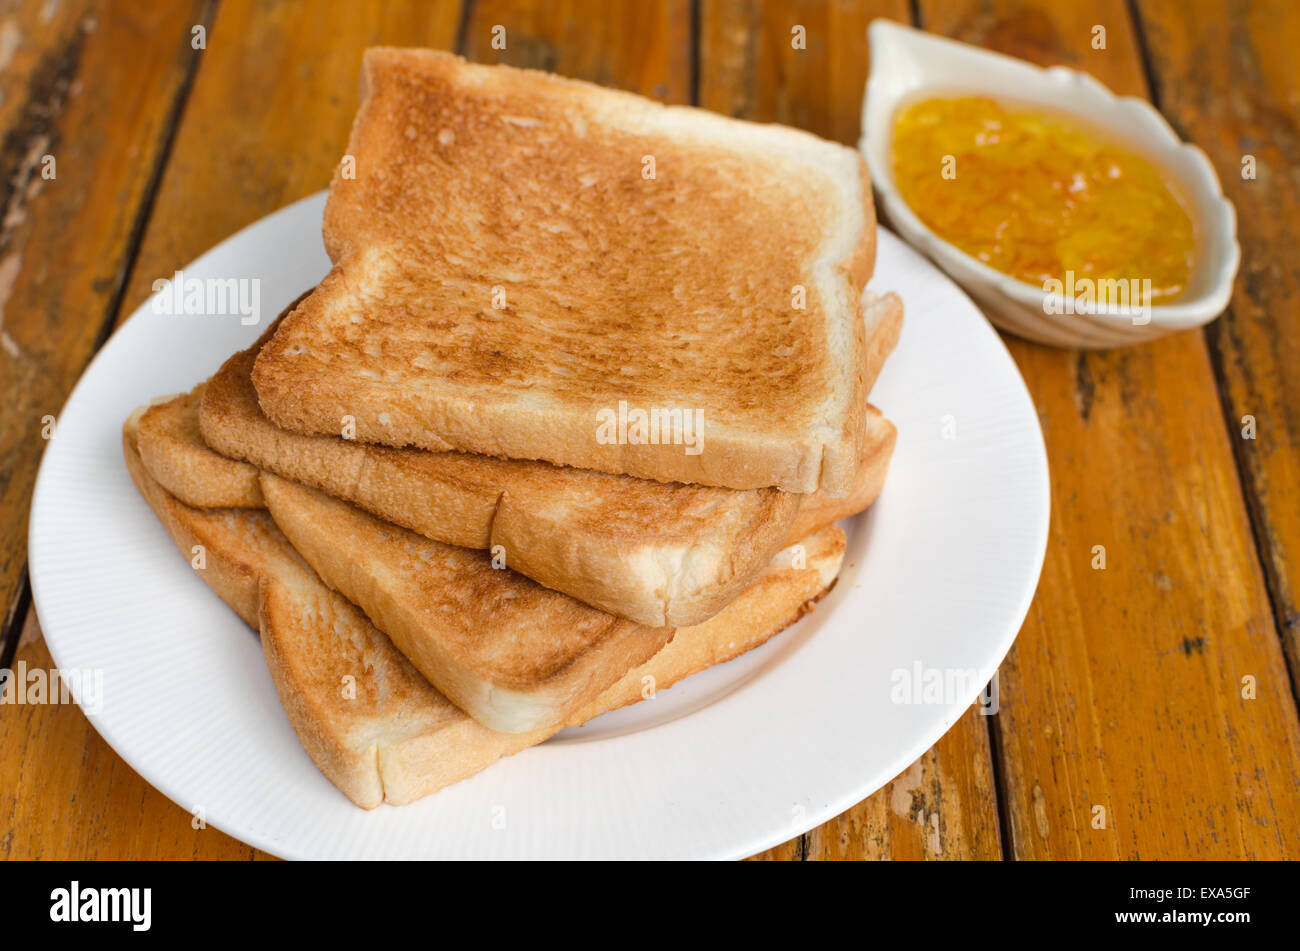 Slices of toast bread with orange jam on wood background Stock Photo